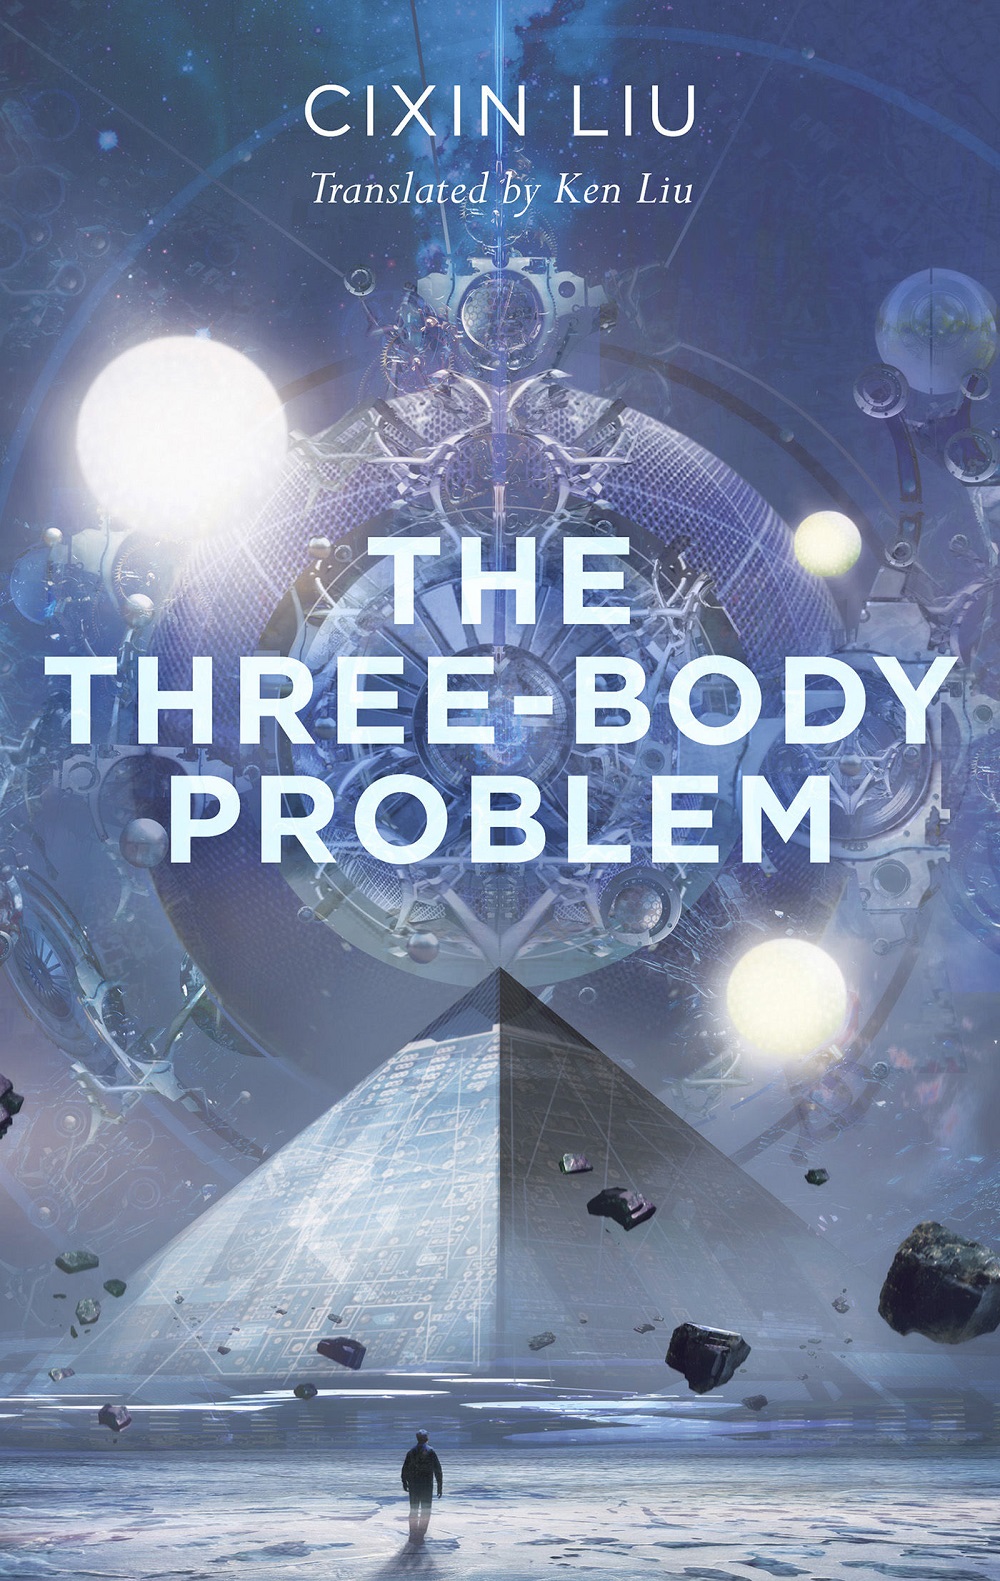 three-body-problem